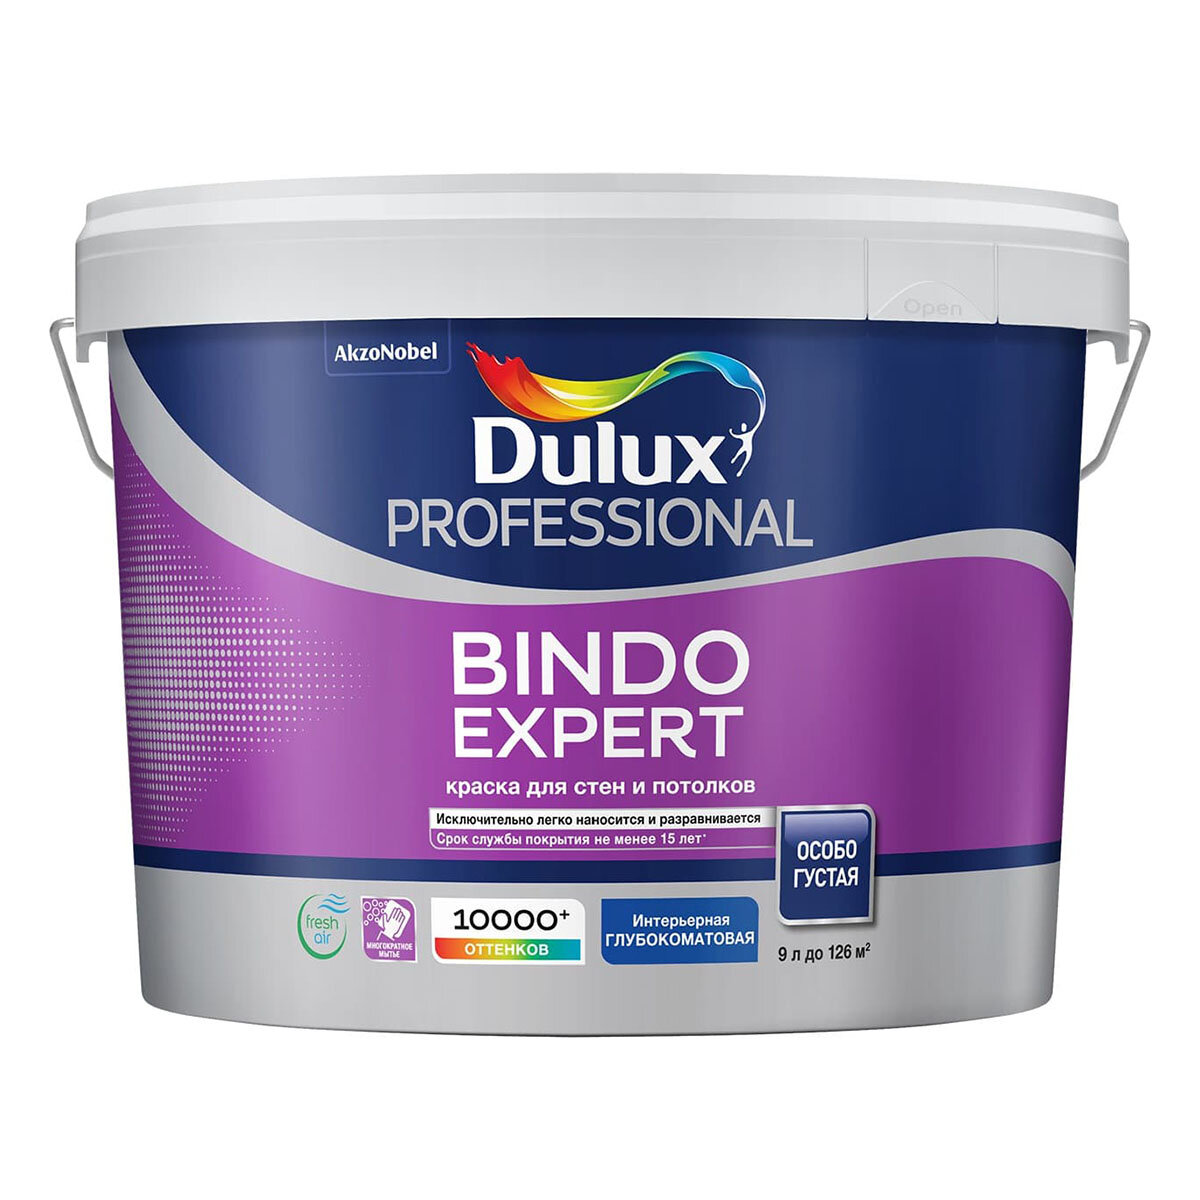 DULUX BINDO EXPERT краска для стен и потолков, особо густая, глубокоматовая, база BW (9л)